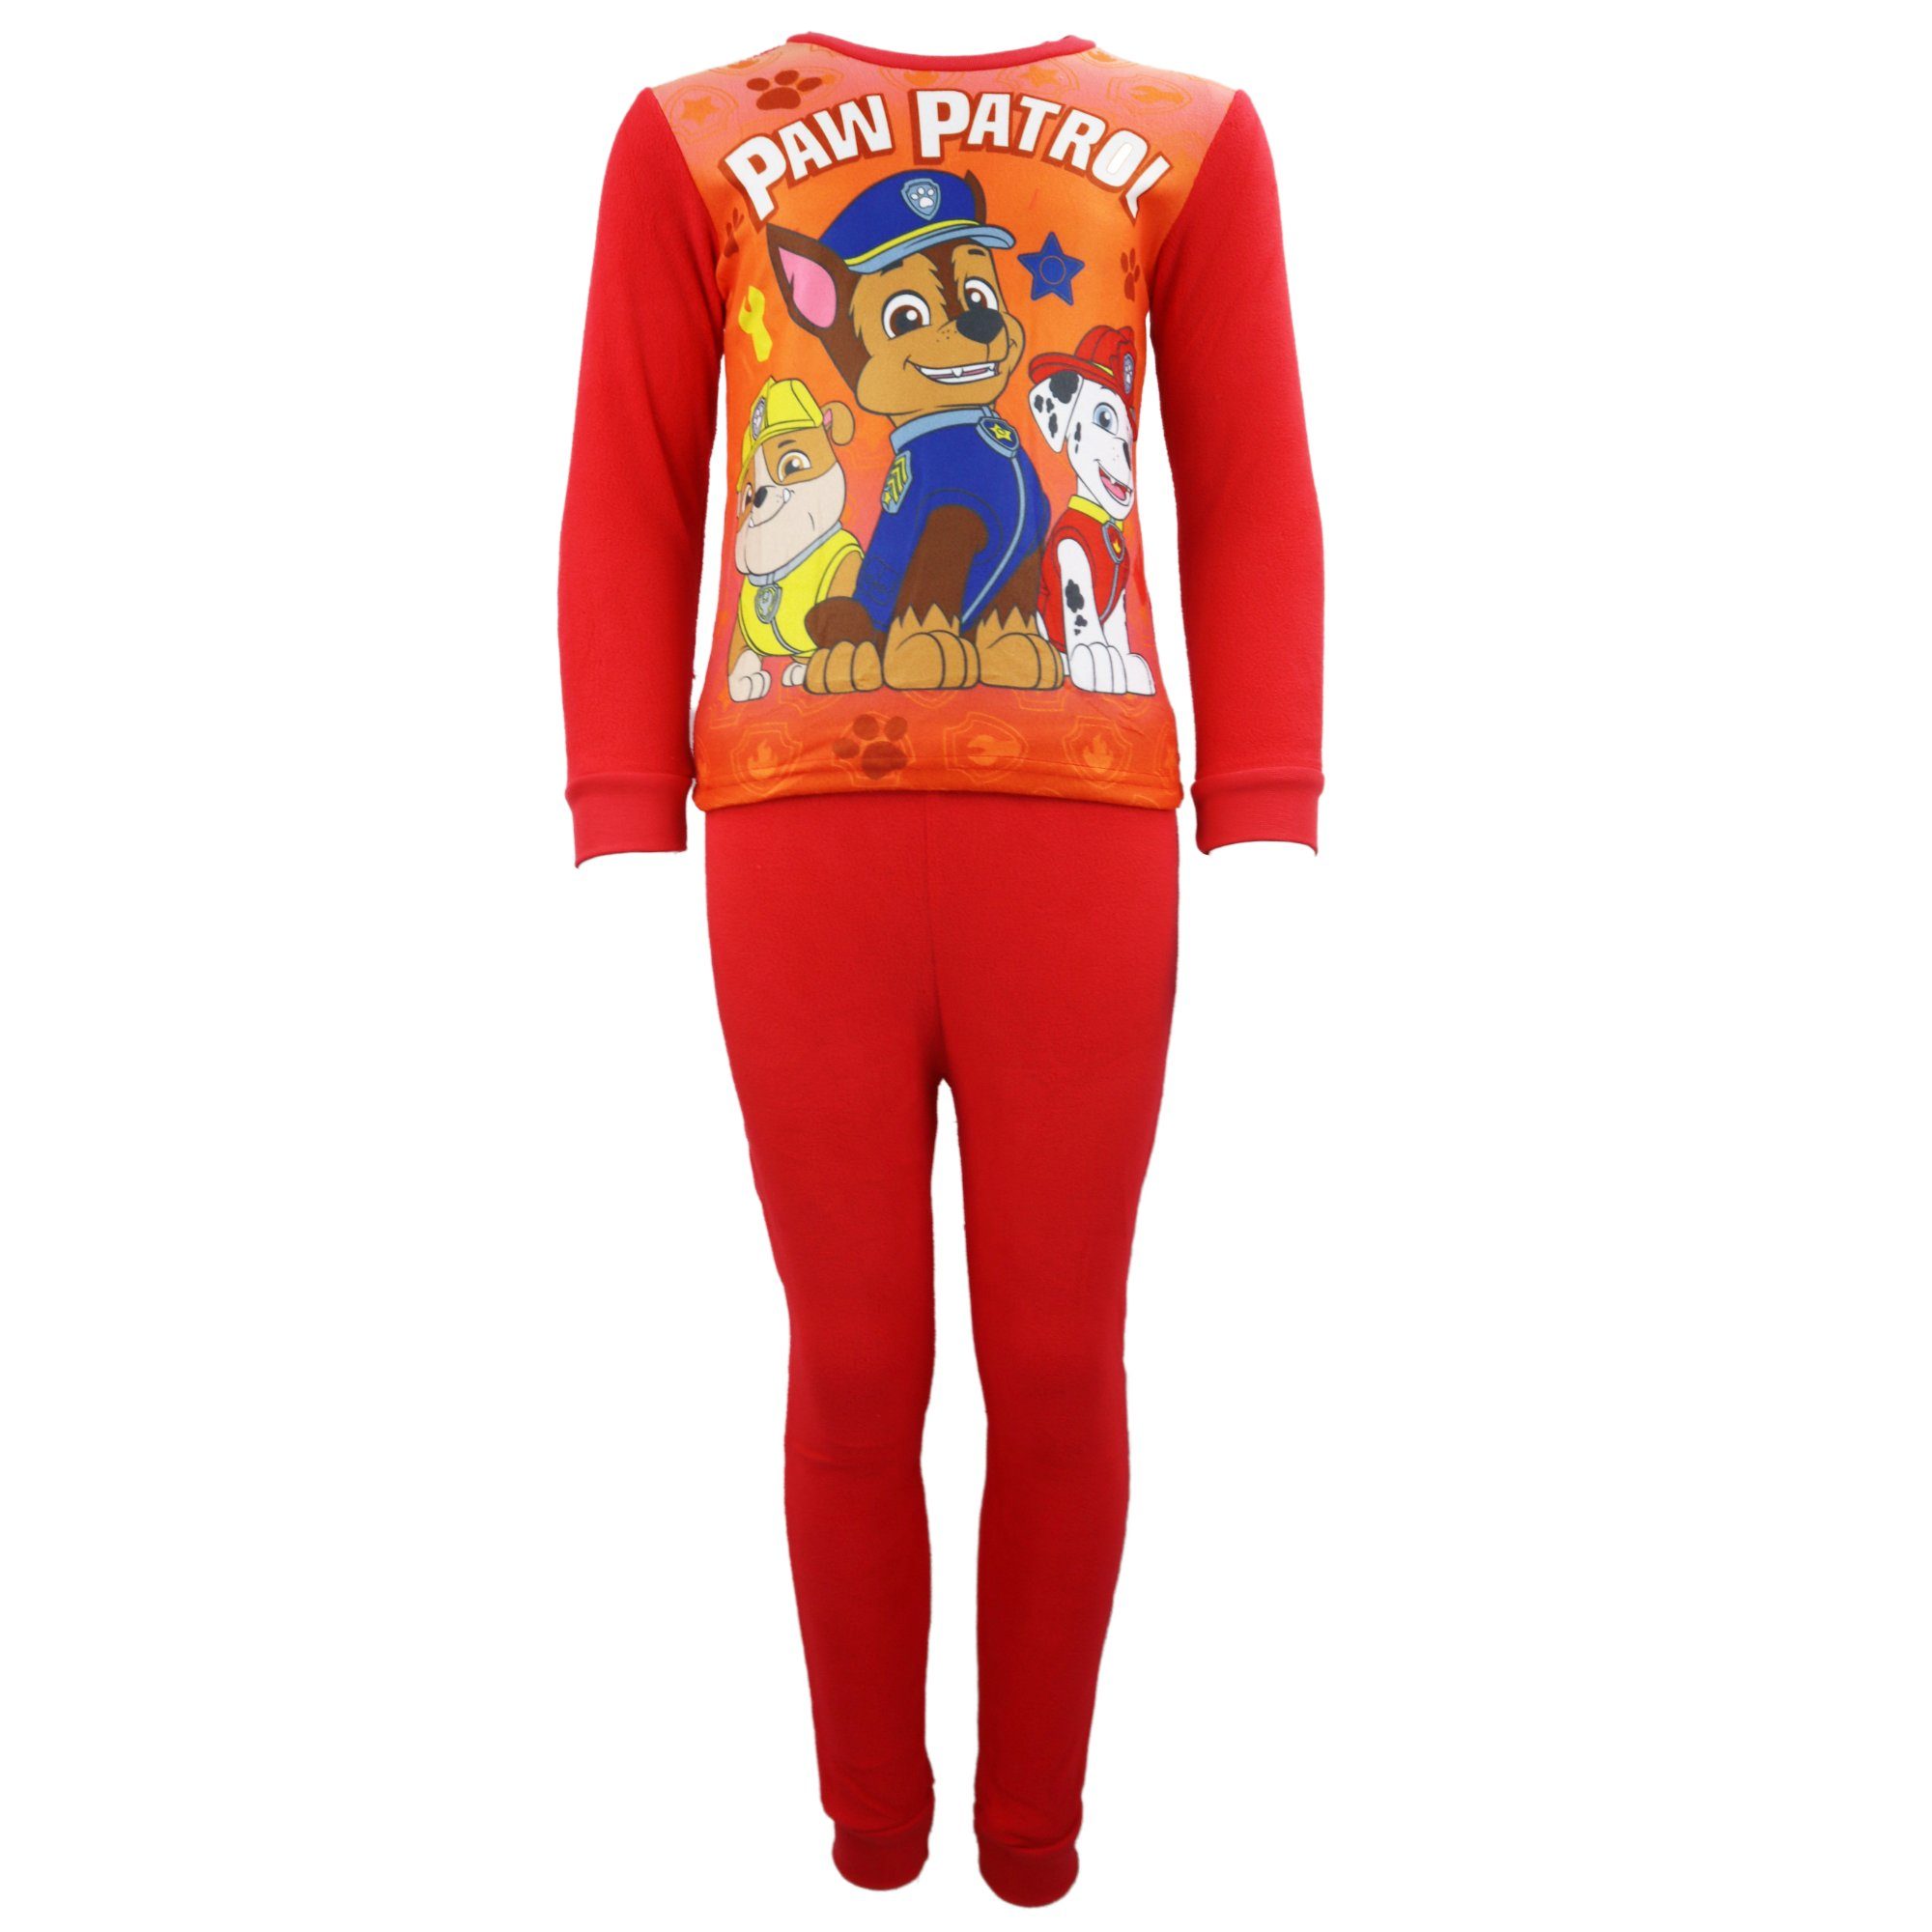 PAW PATROL Schlafanzug Paw Patrol Polar Fleece Kinder Jungen Pyjama Gr. 92  bis 128